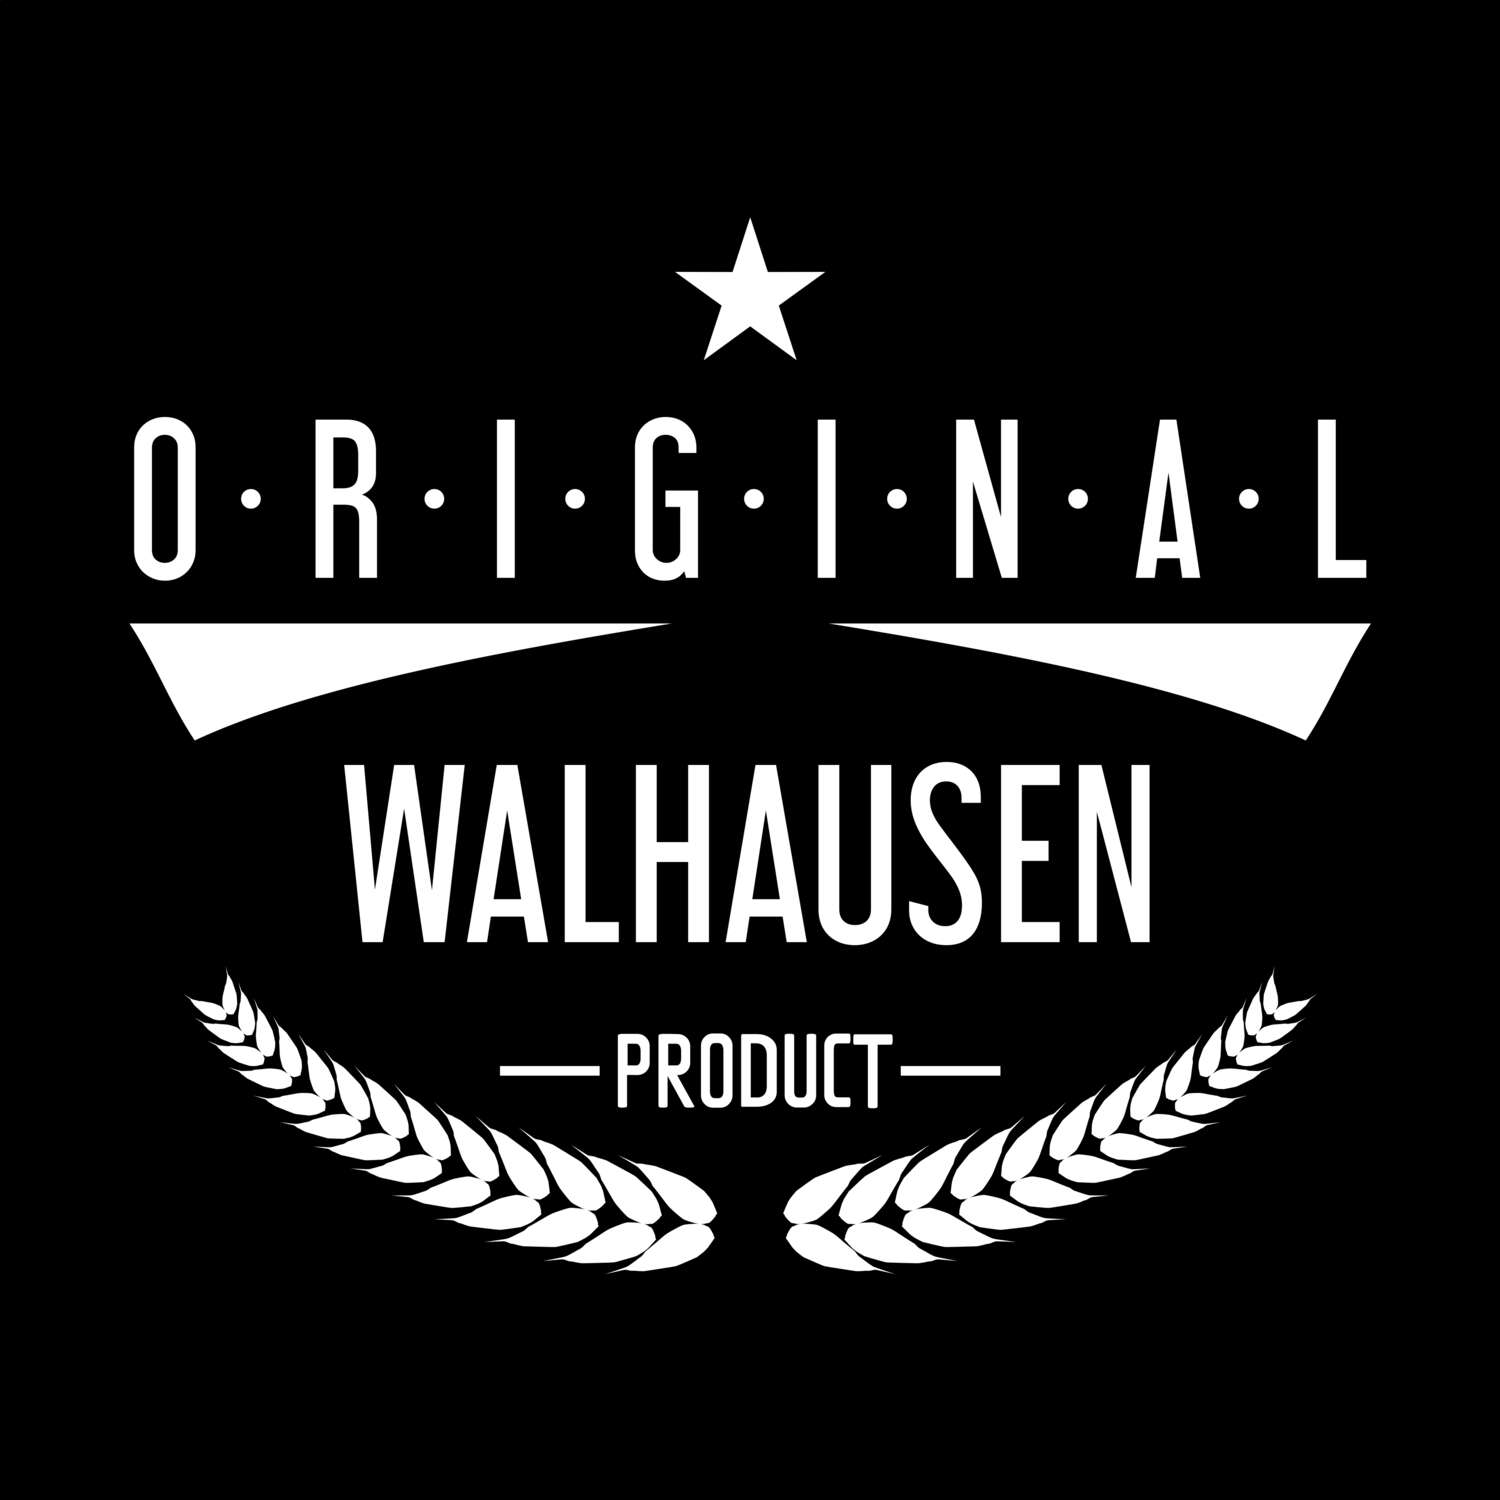 Walhausen T-Shirt »Original Product«